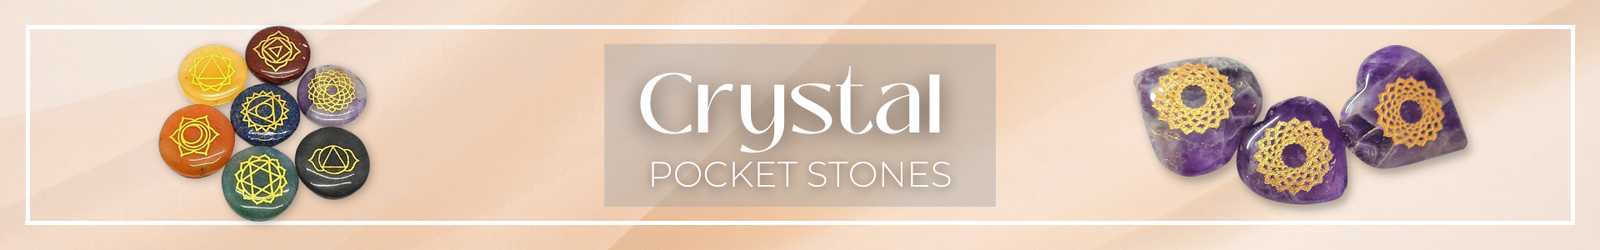 Crystal Pocket stones